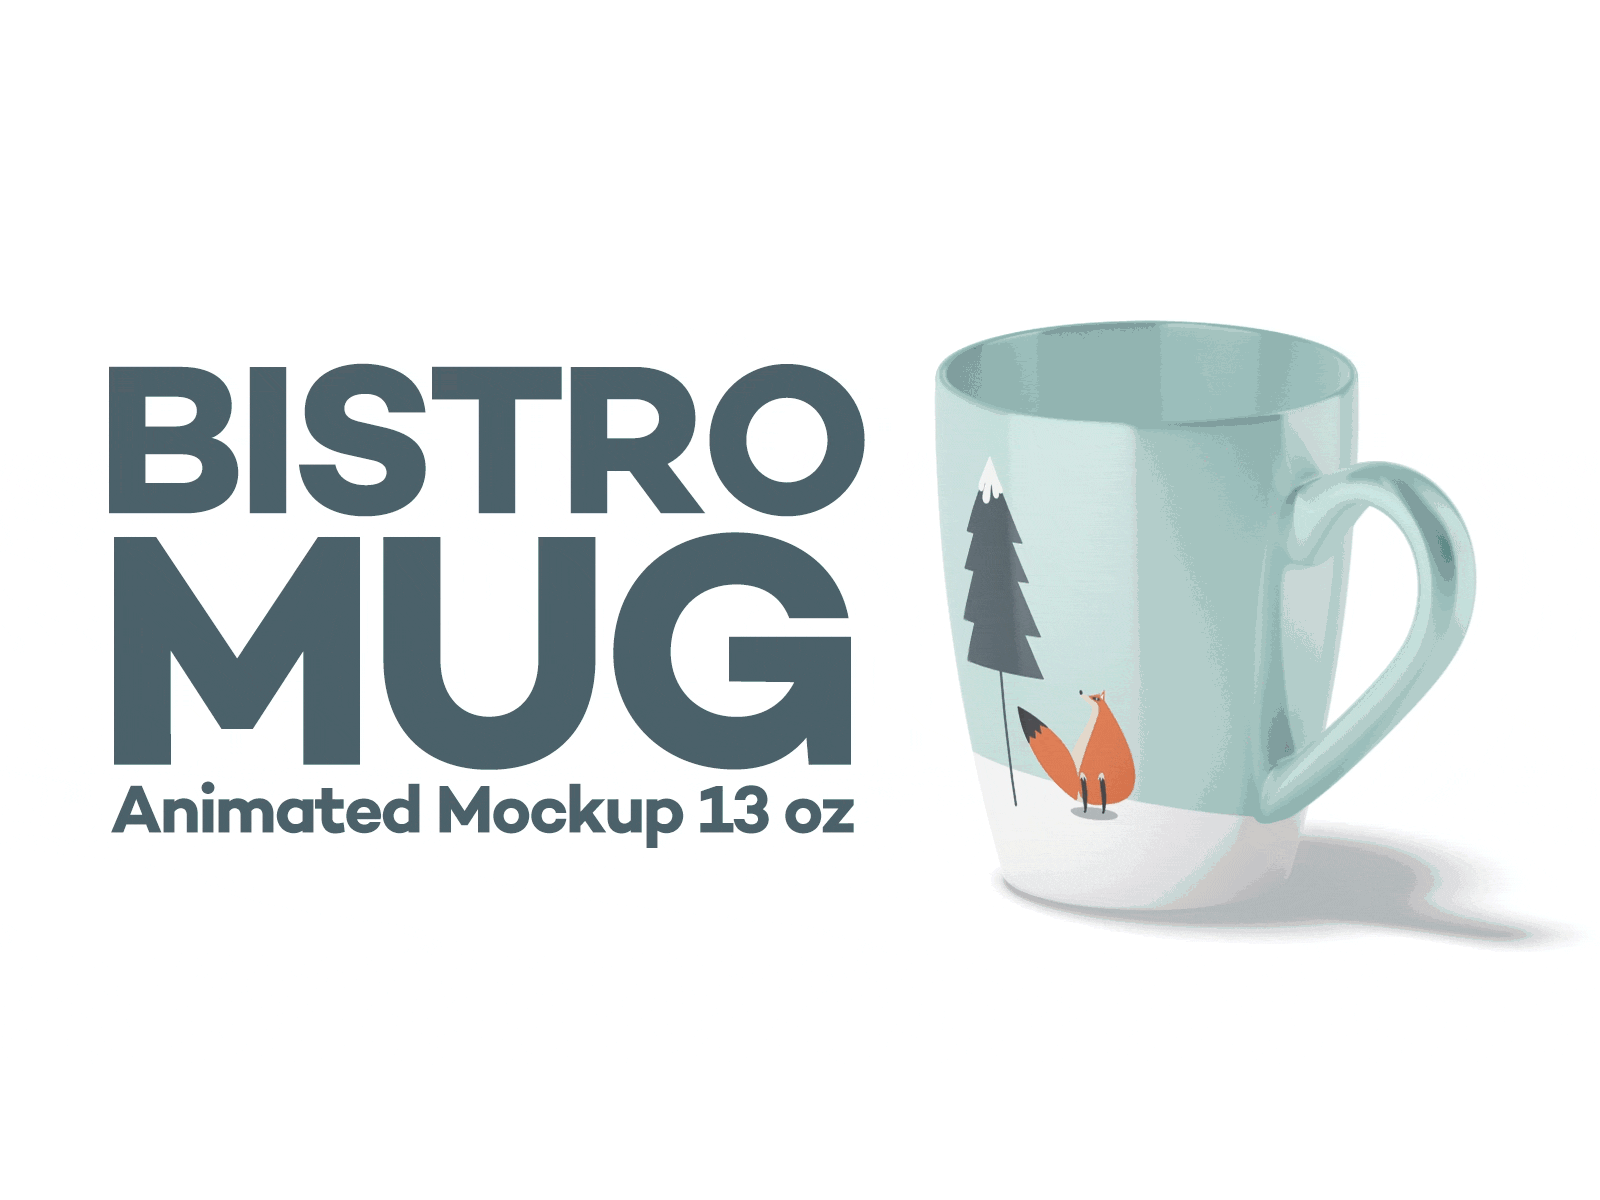 Bistro Mug Animated Mockup 13 oz 13 oz animated bistro download drink mockup porcelain psd tankard utensil